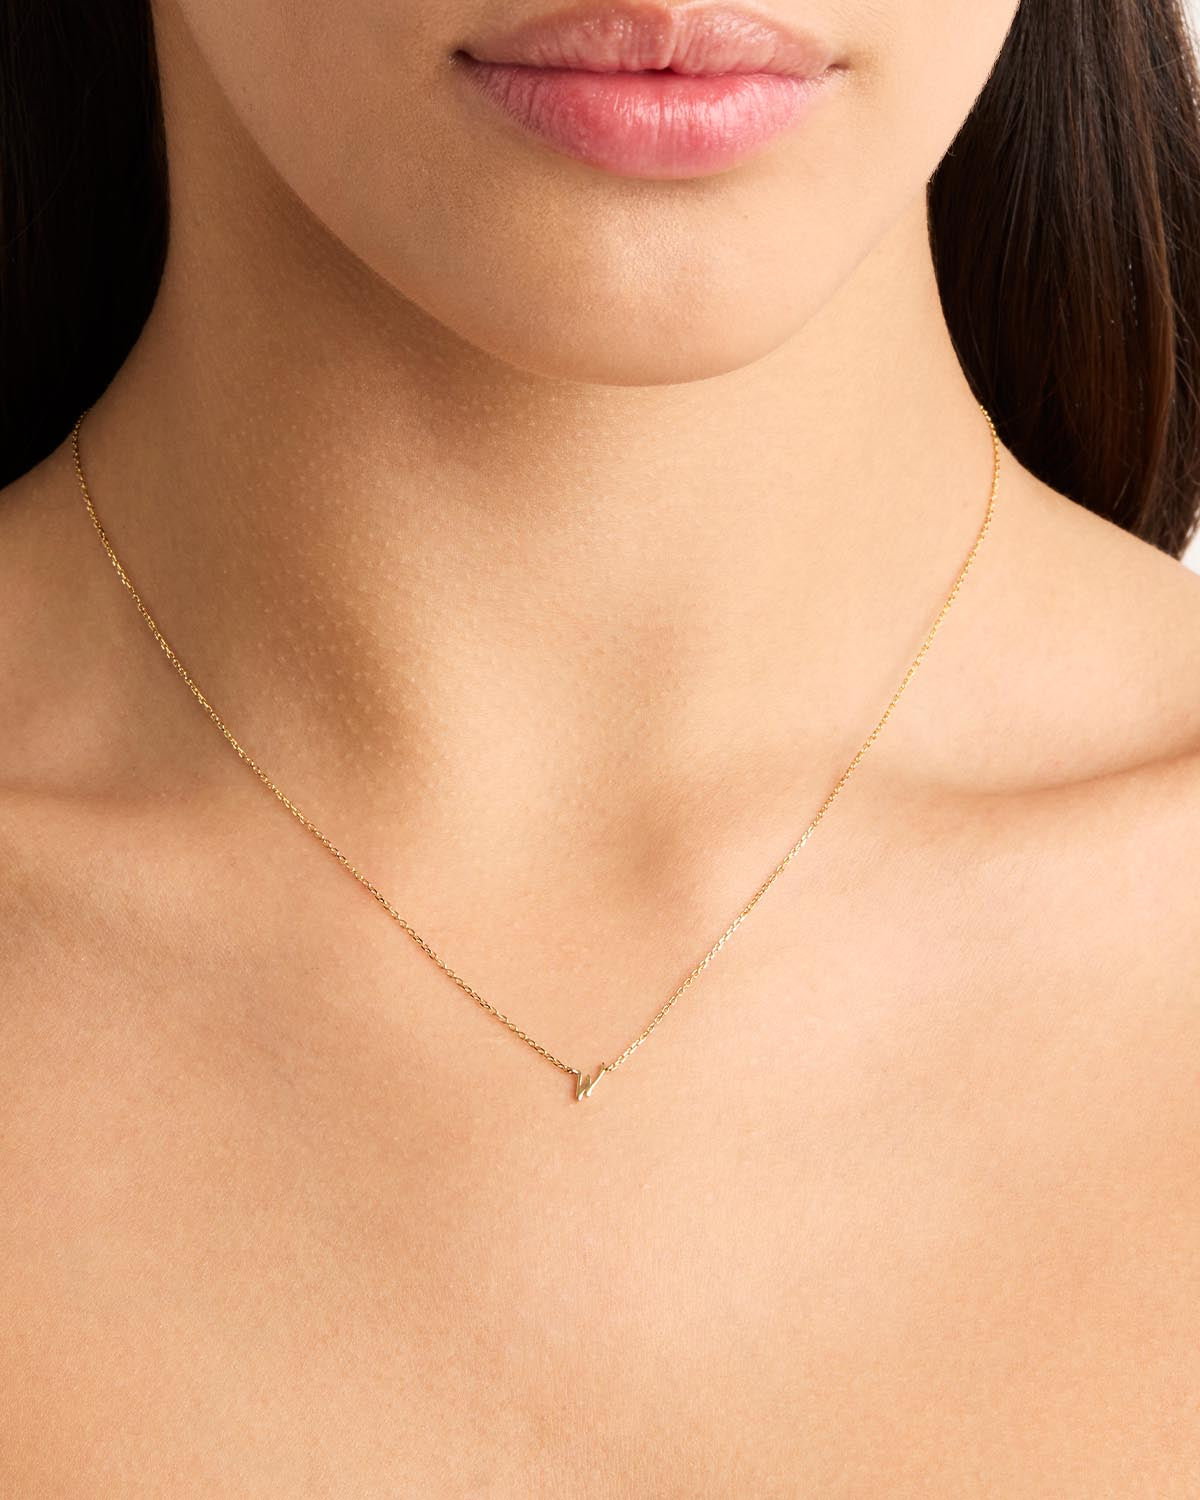 santa monica 14k gold mama necklace - $220